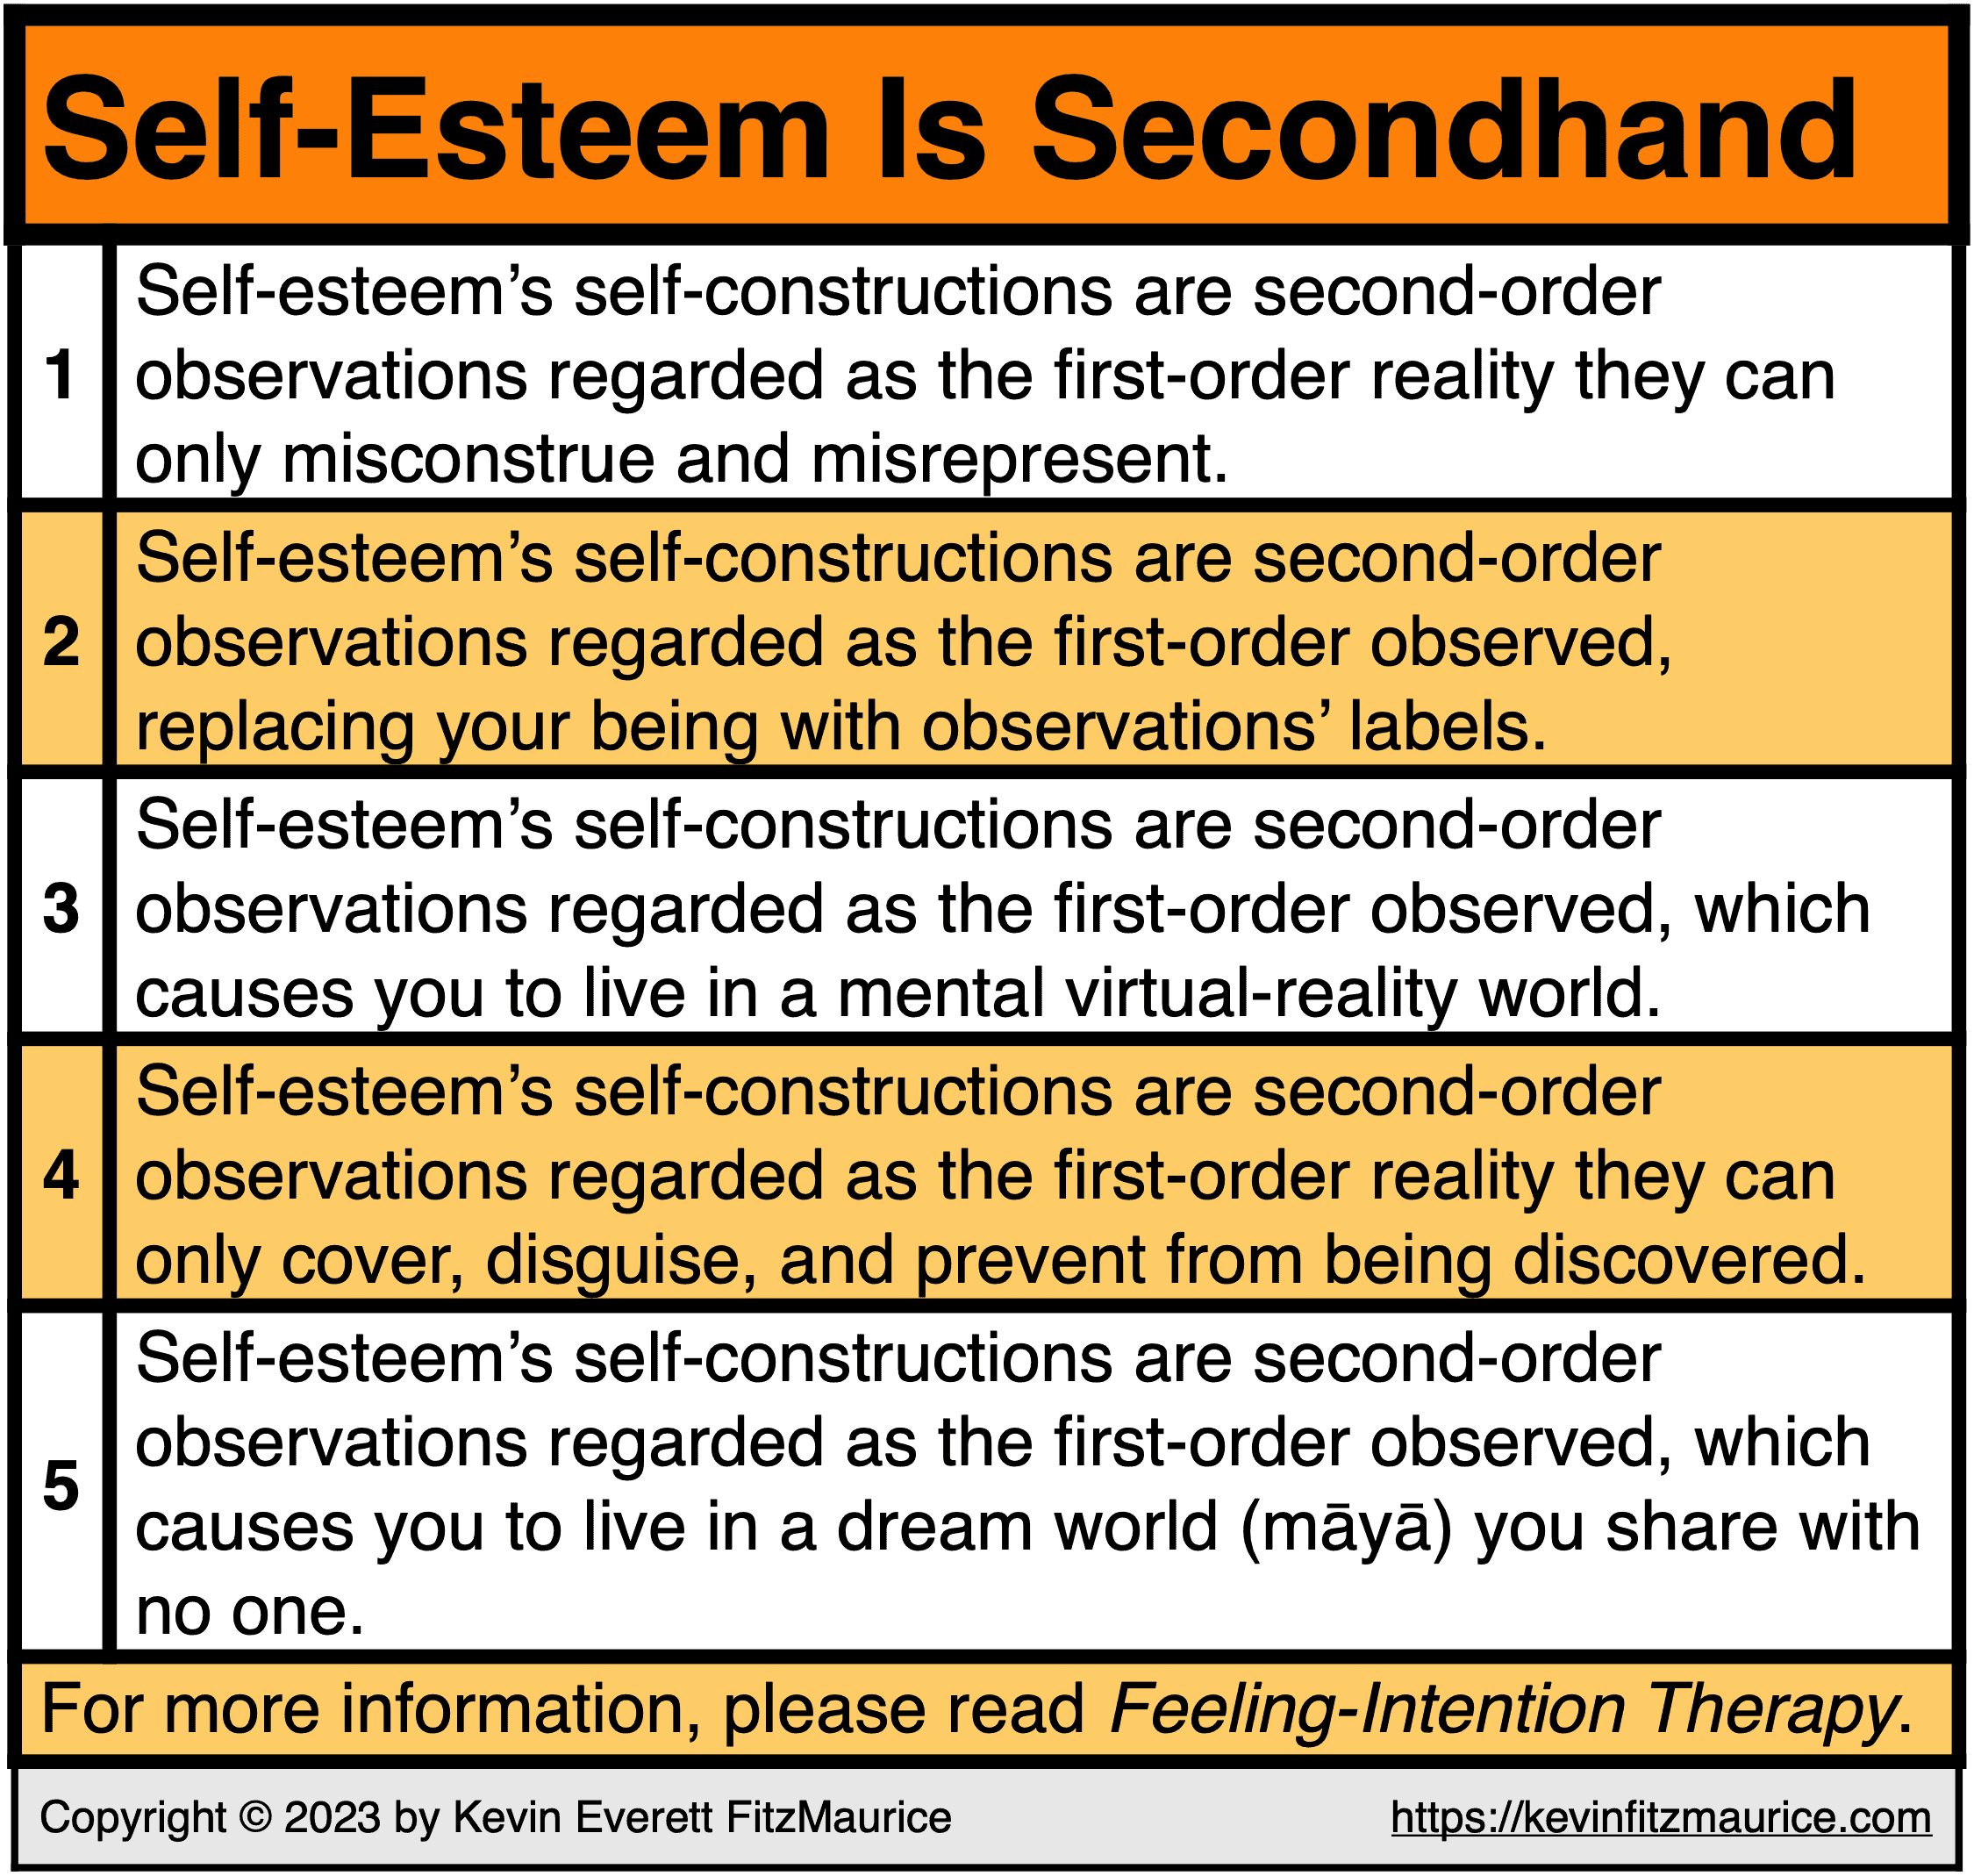 Self-Esteem Is Secondhand